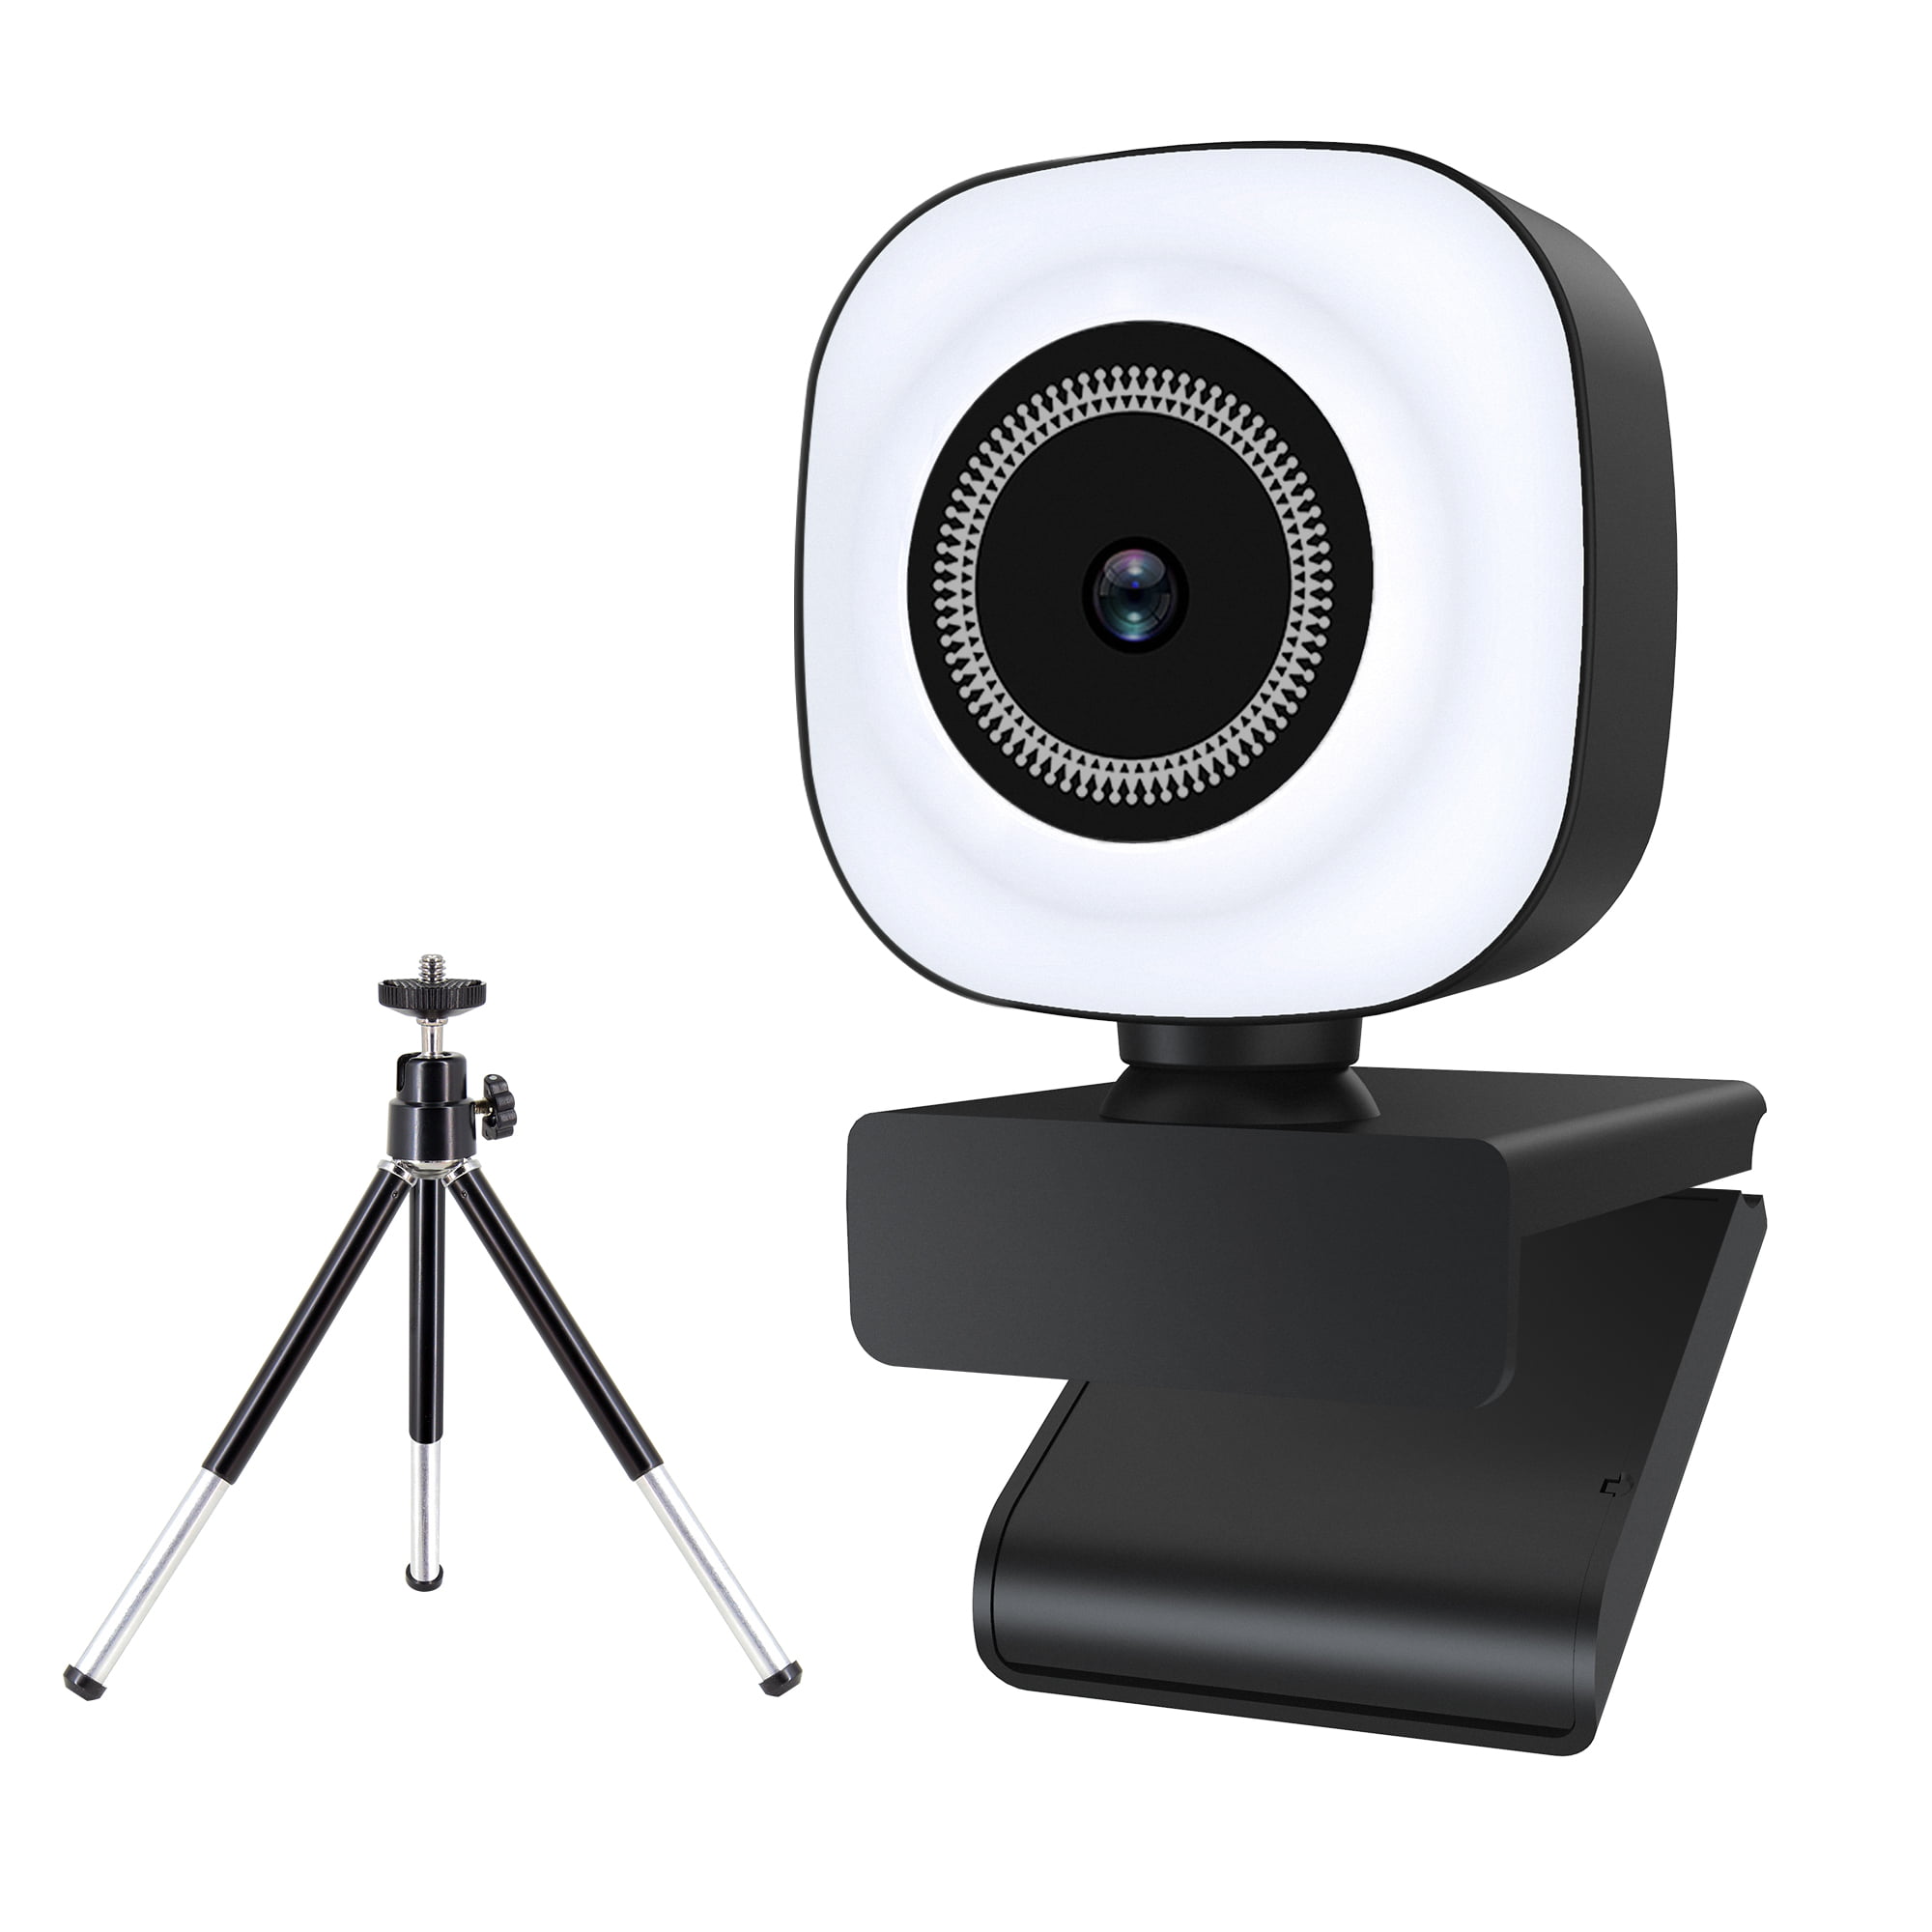 Rotatable USB 2.0 720P HD Webcam Video Recording Web Camera for PC Laptop AU ZY 